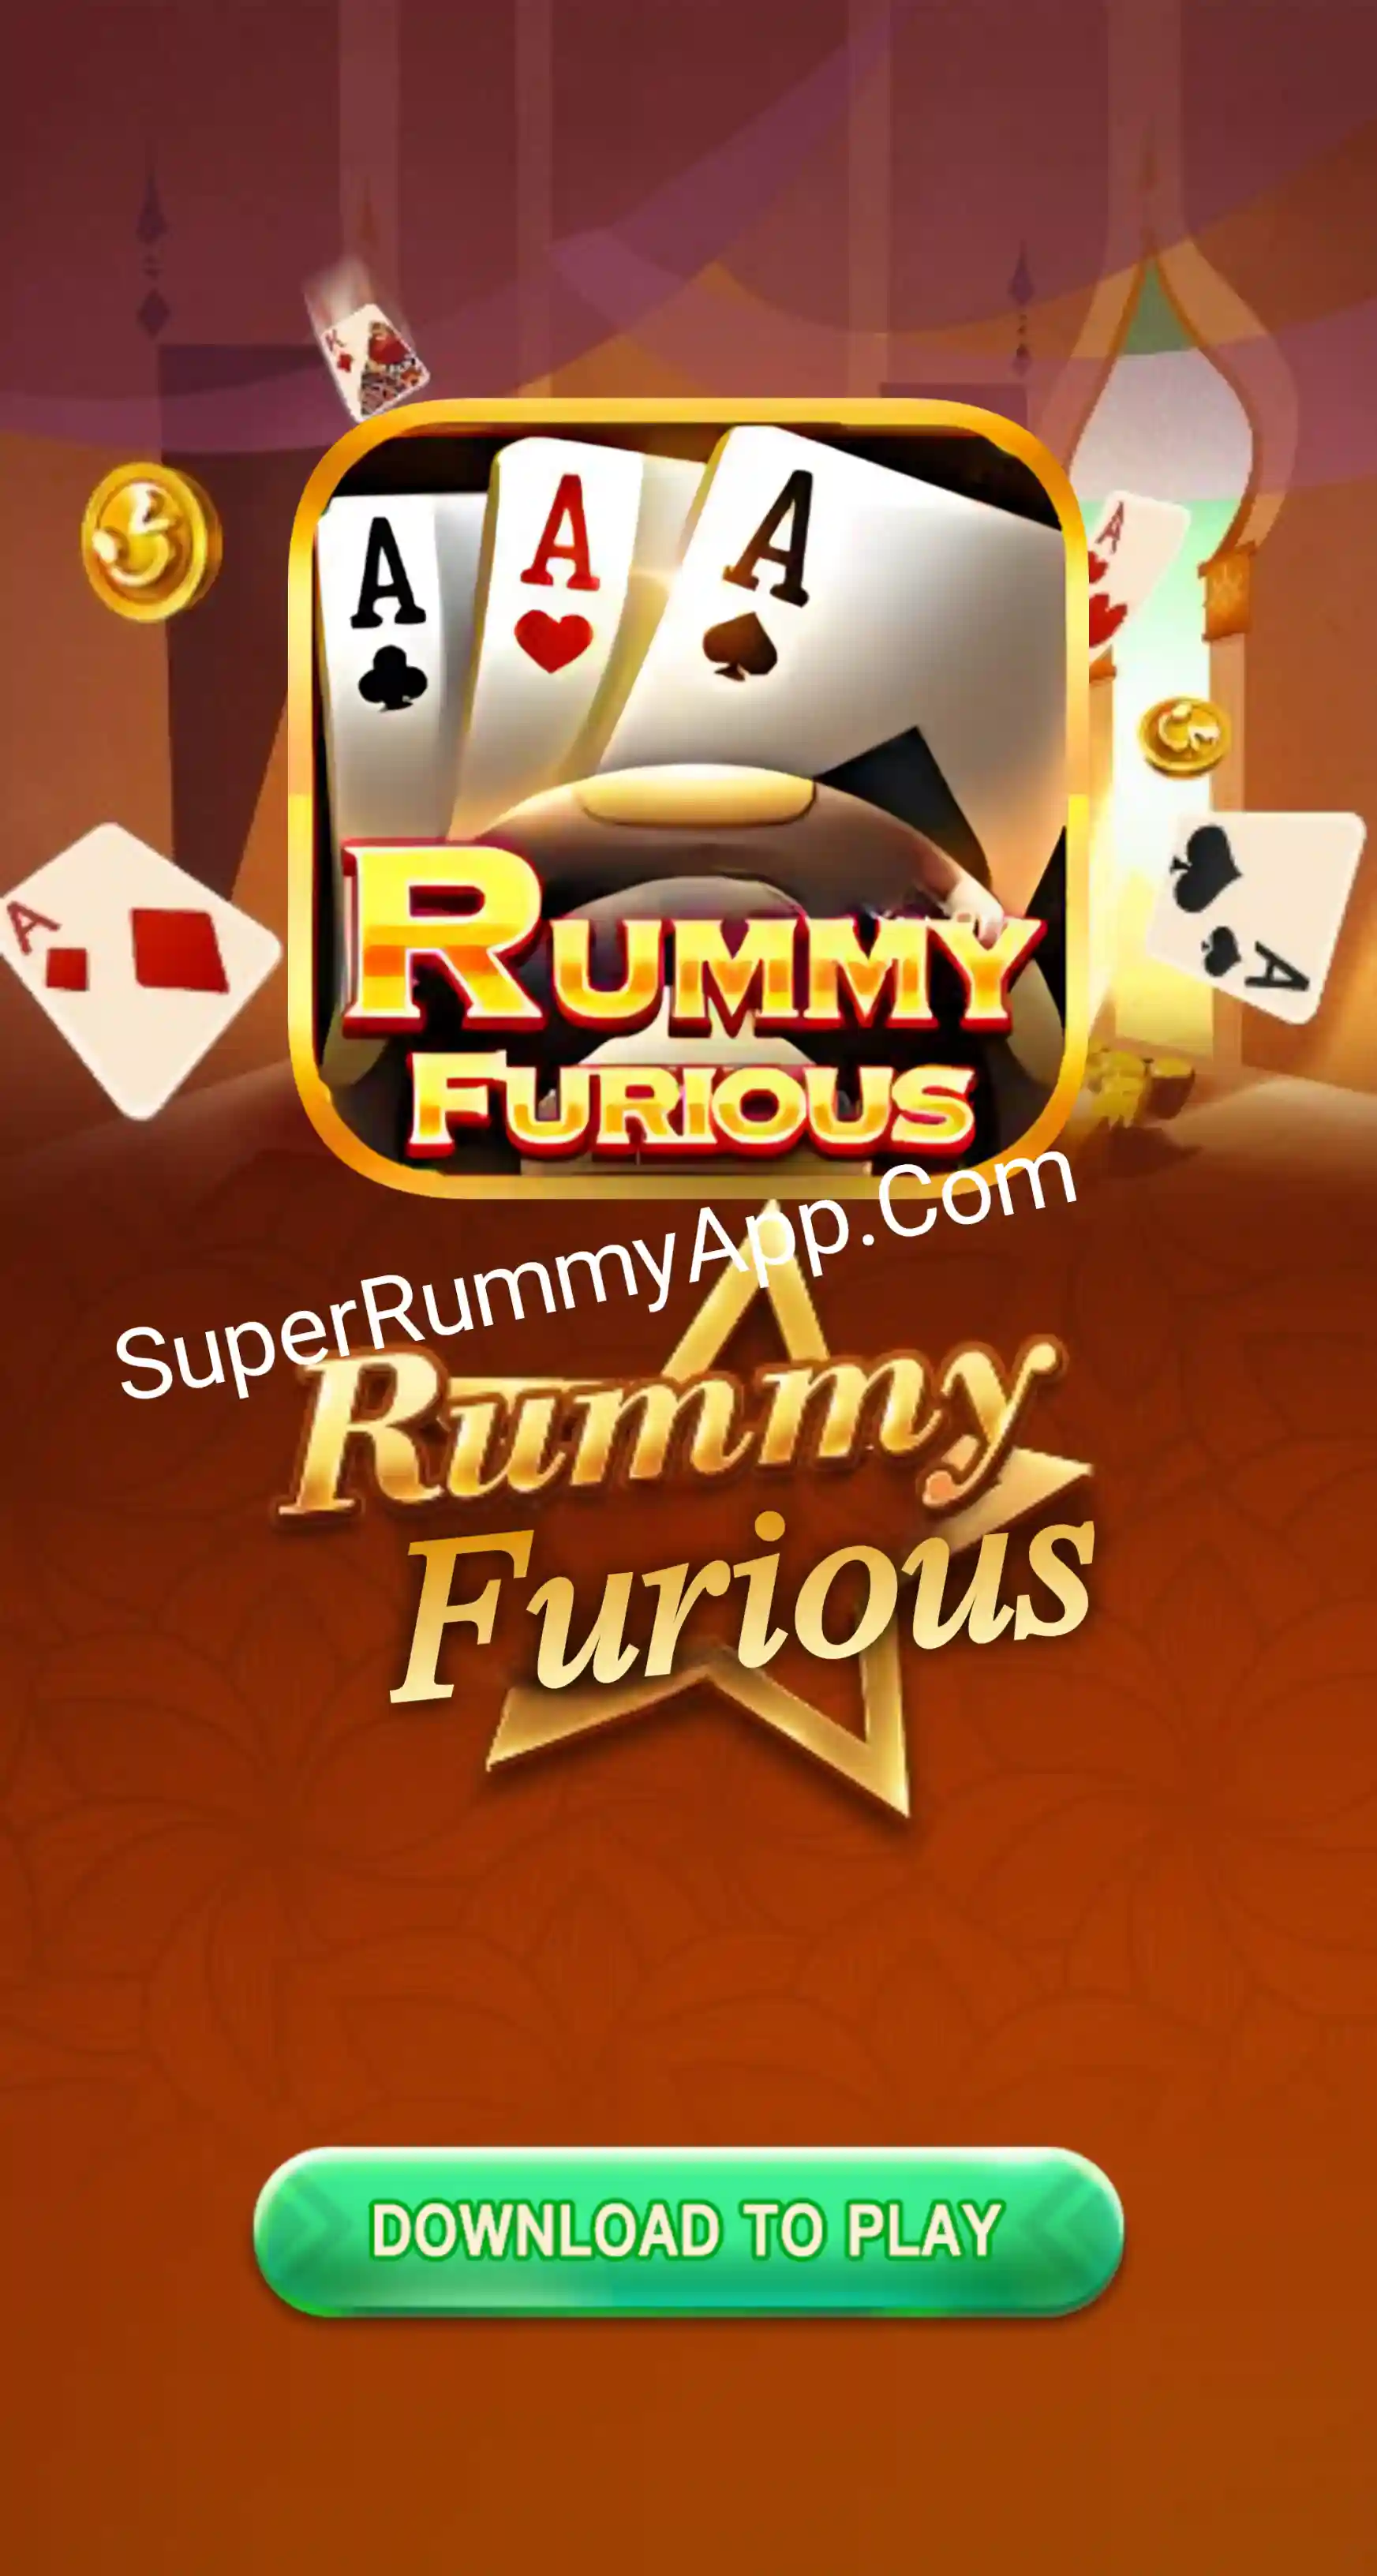 Rummy Furious Apk Download - Super Rummy App